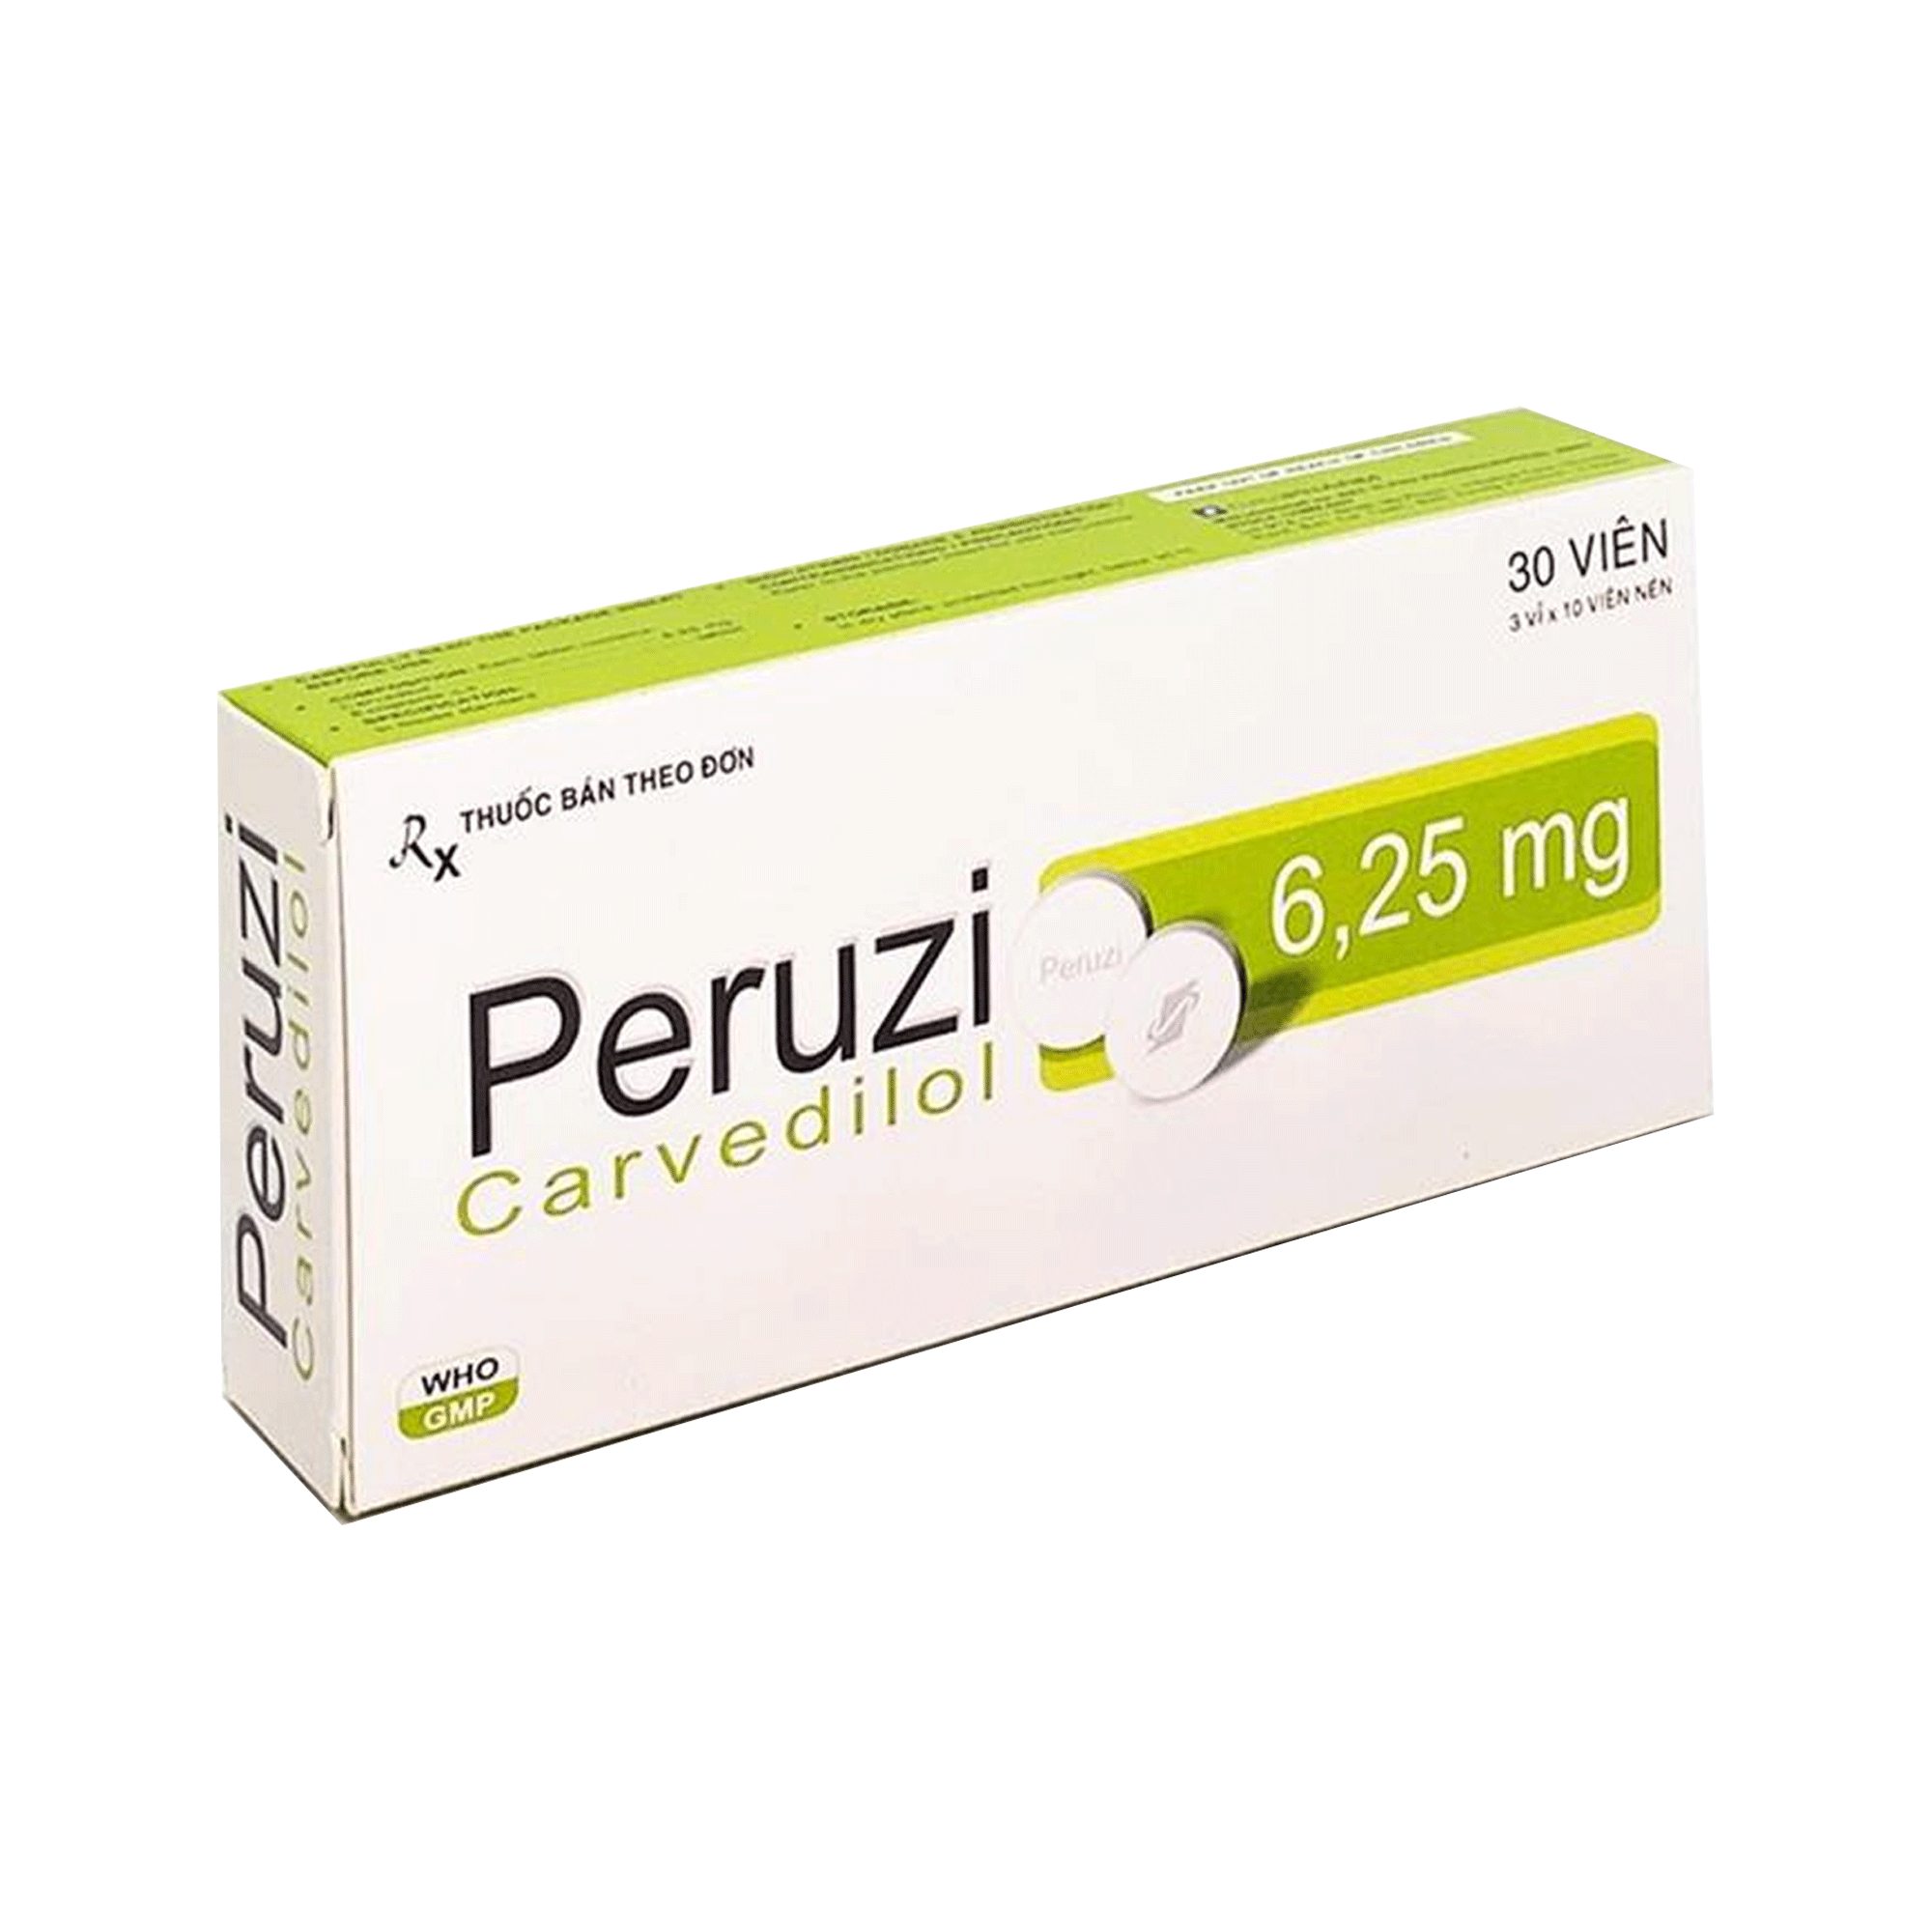 Peruzi-6,25-gia-bao-nhieu